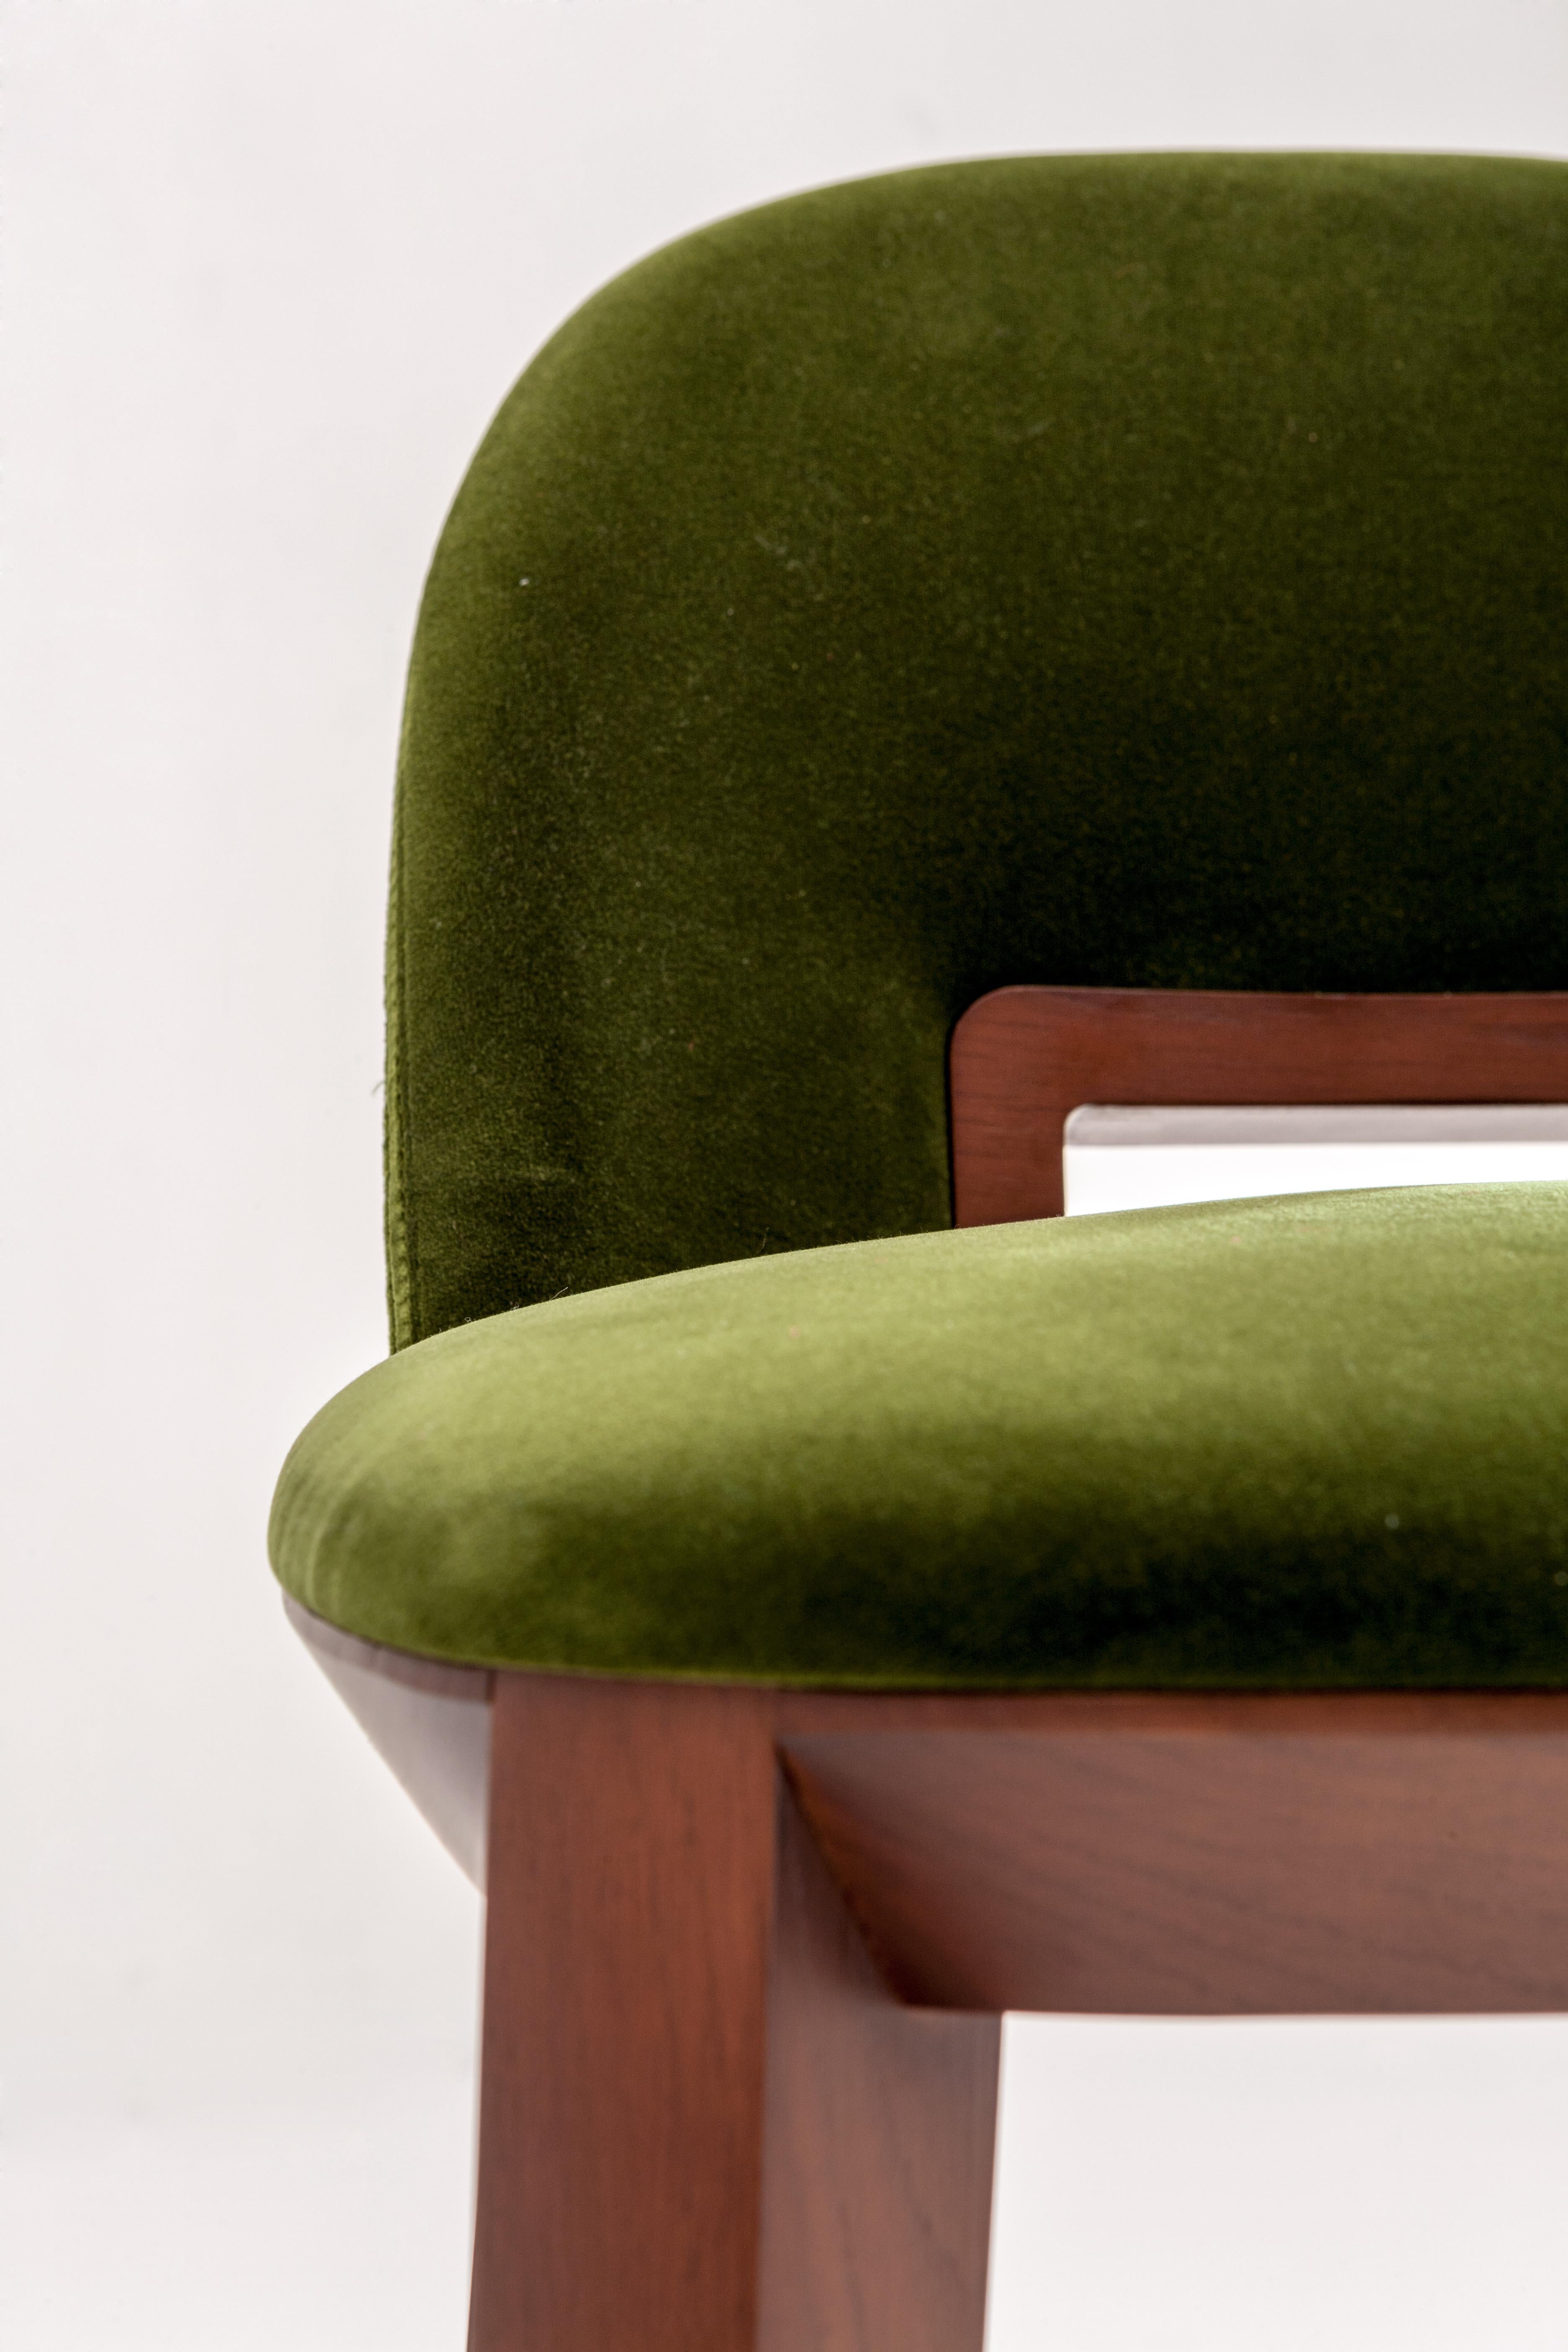 olive green bar stools